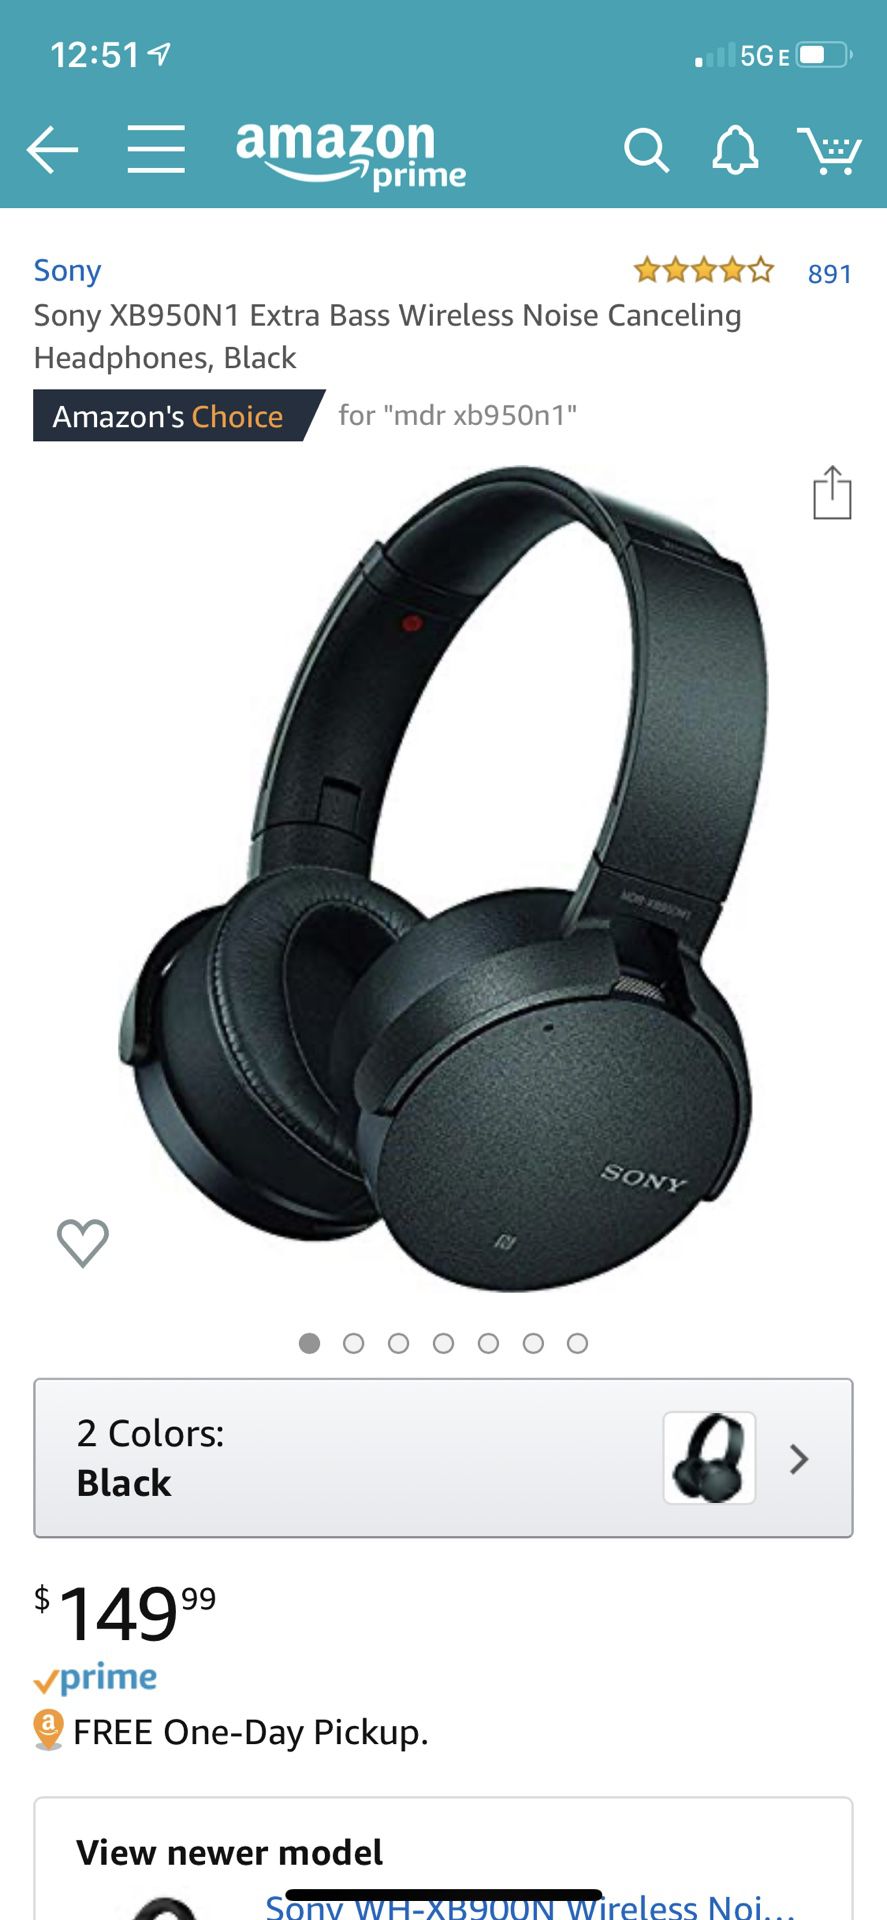 Sony XB950N1 Extra Bass Wireless Noise Canceling Headphones Black